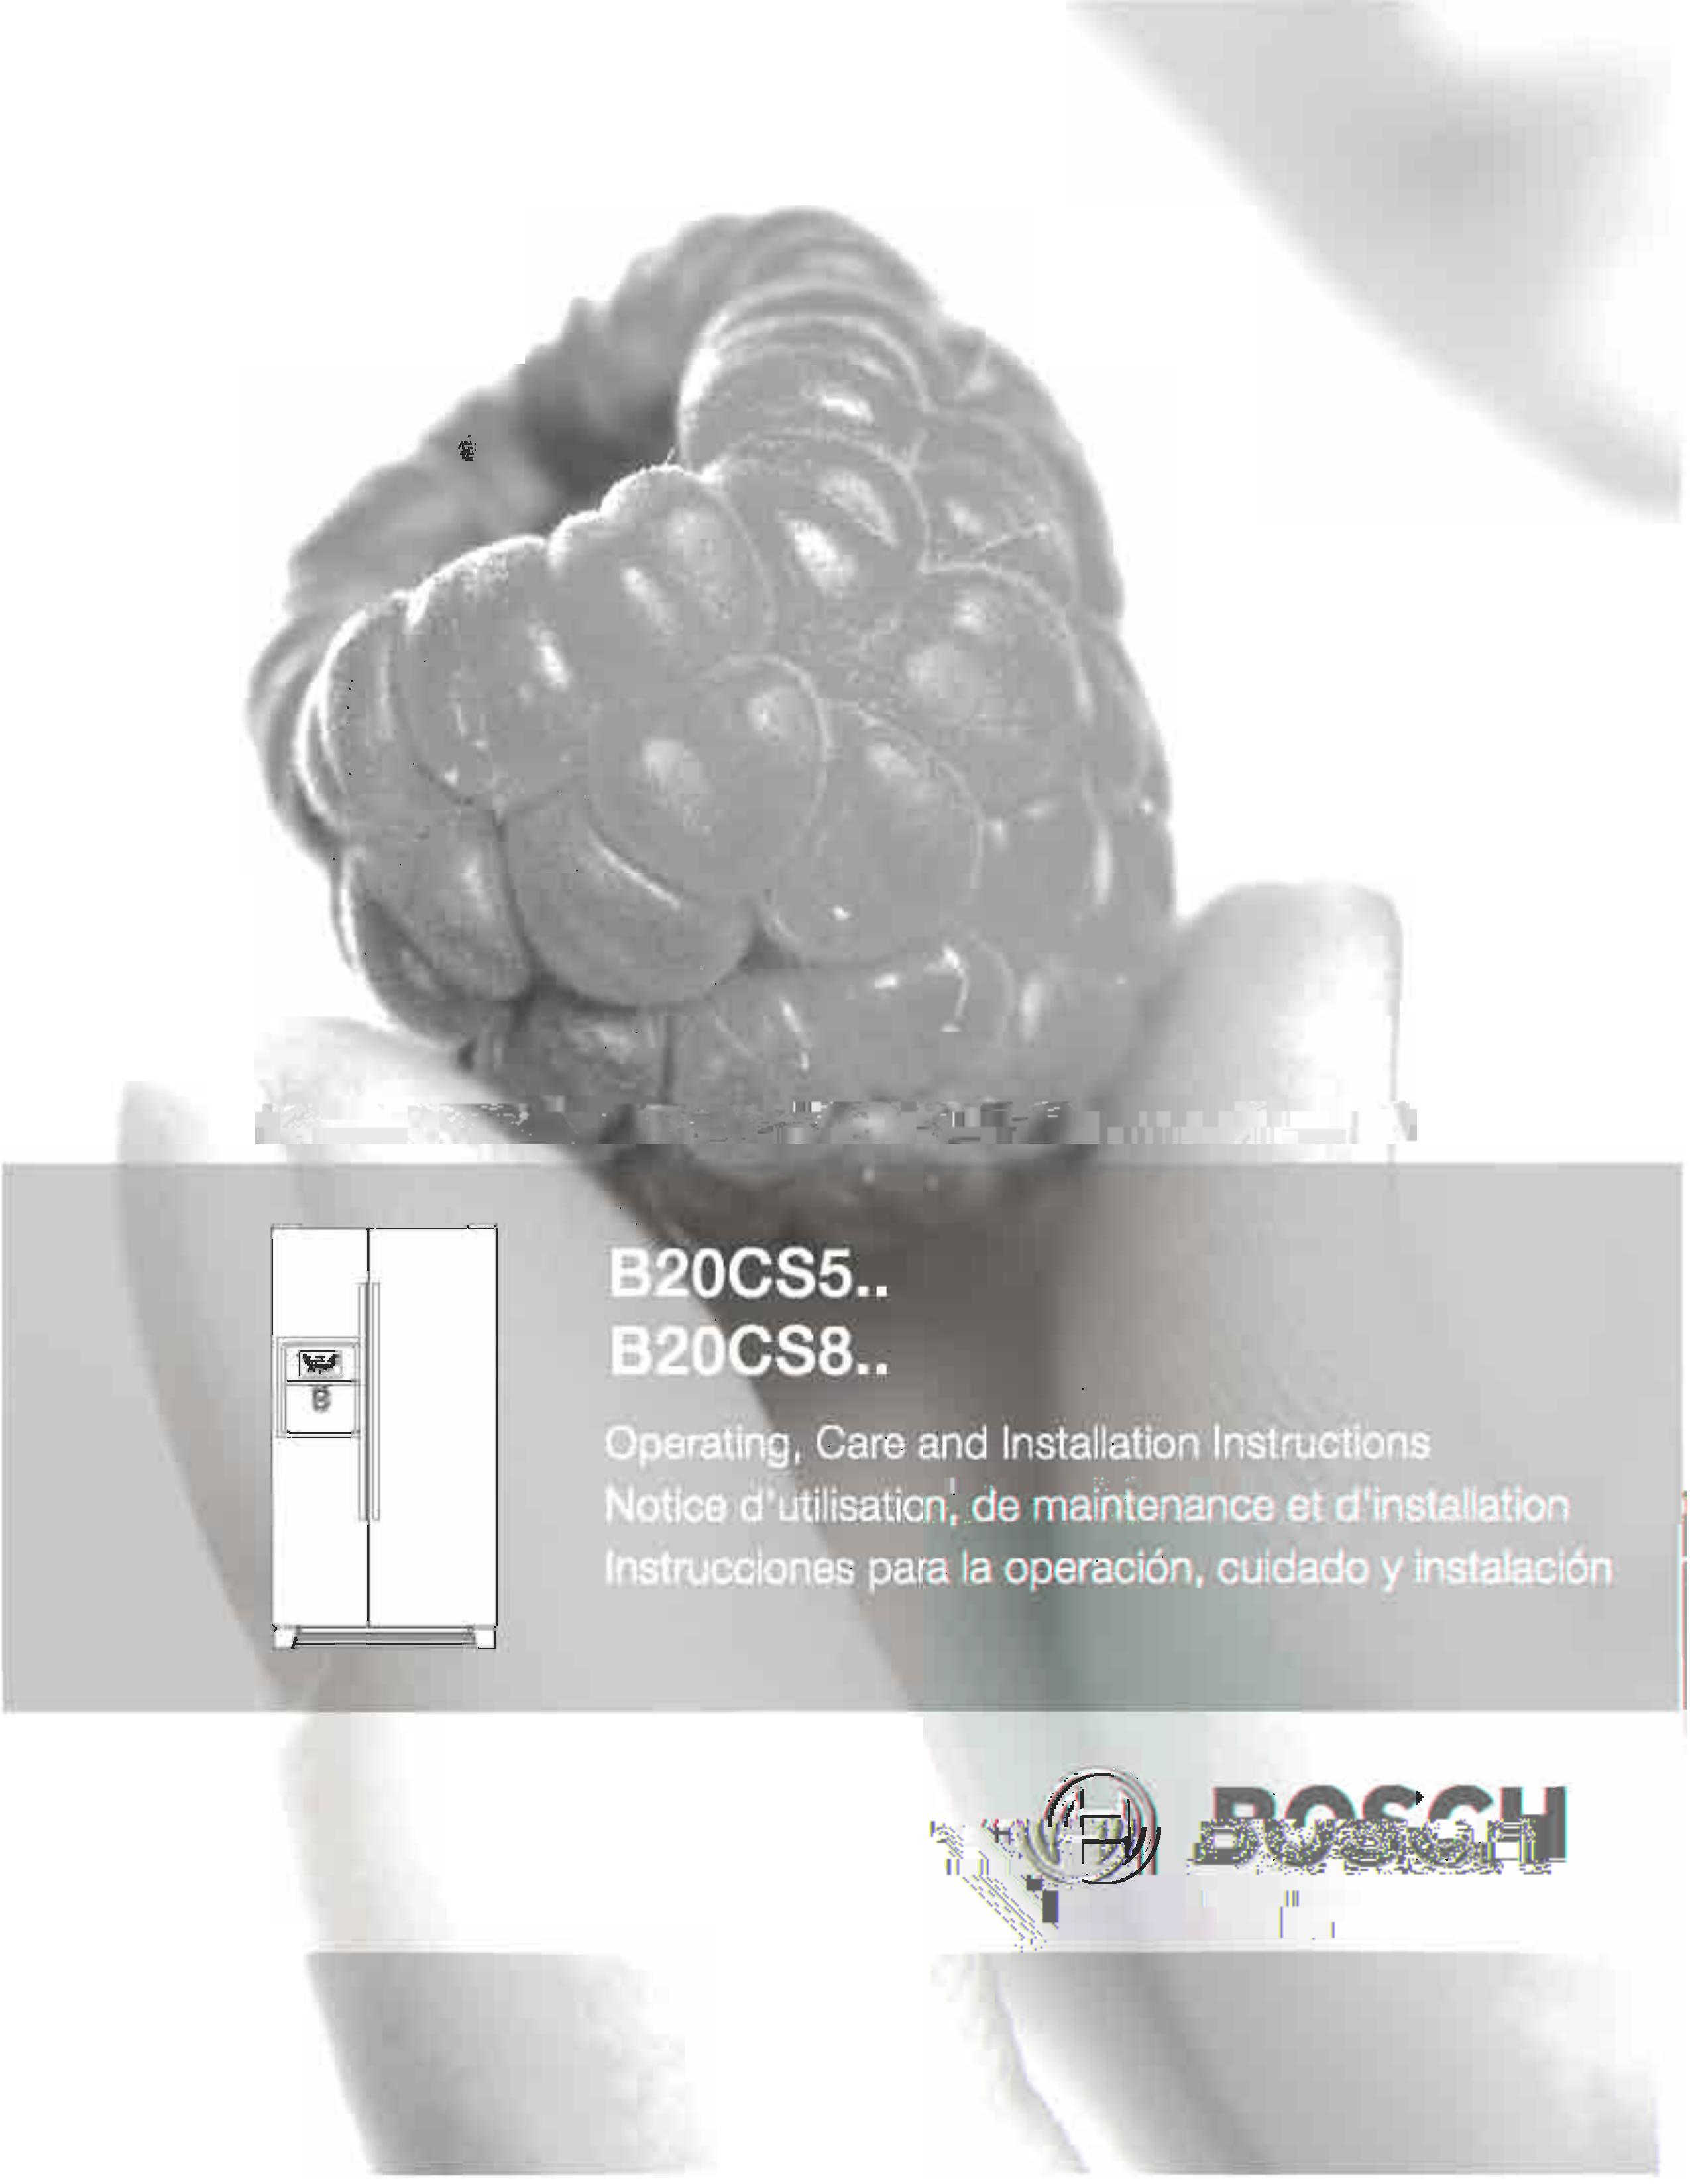 Bosch Appliances B20CS8 Refrigerator User Manual